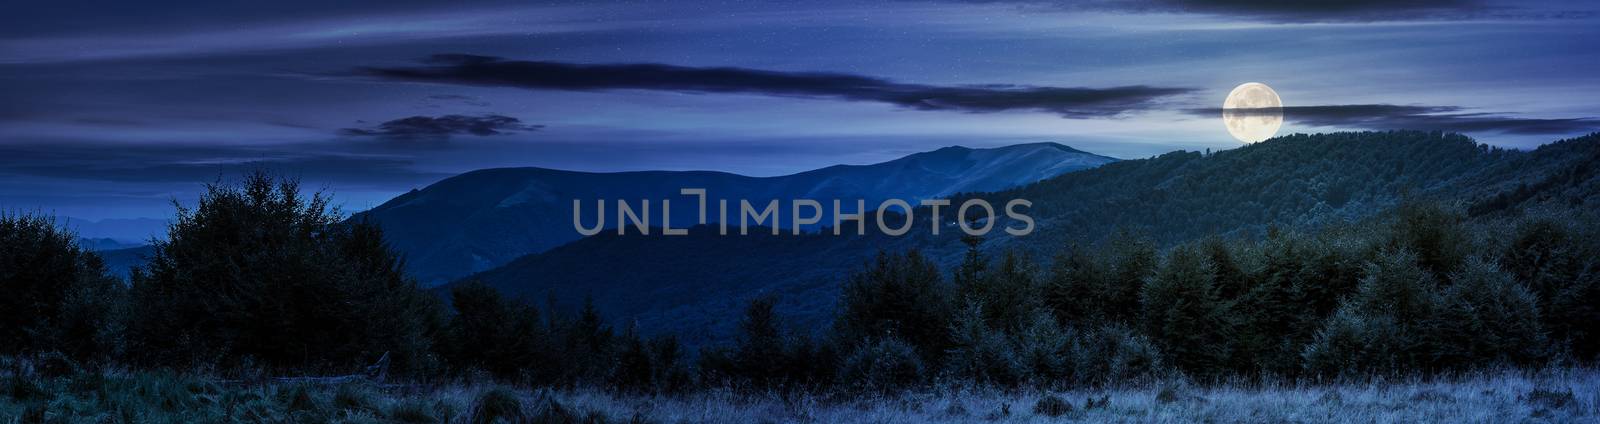 panorama of Carpathian mountains at night by Pellinni